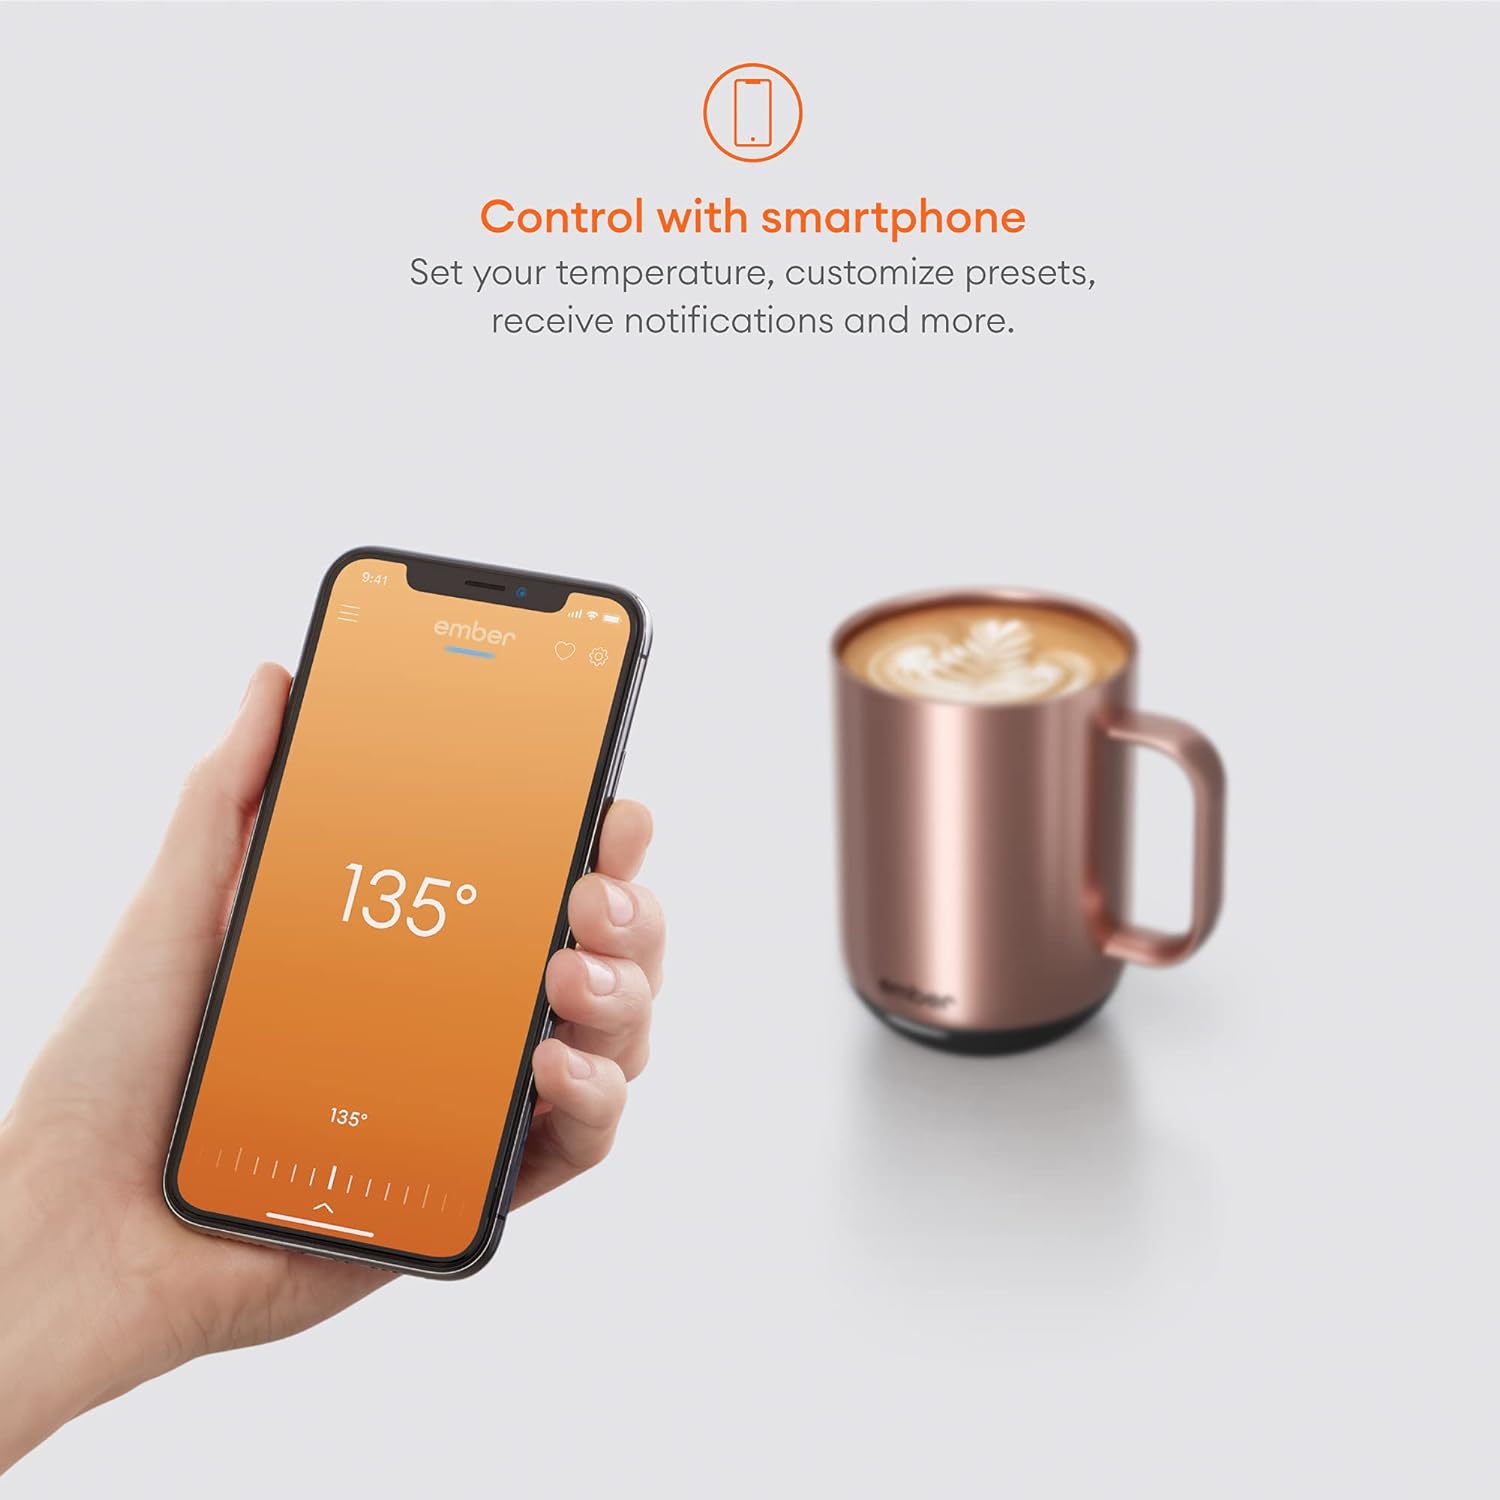 New Ember Temperature Control Smart Mug 2, 10 oz, Rose Gold, 1.5-hr Battery Life - App Controlled Heated Coffee Mug